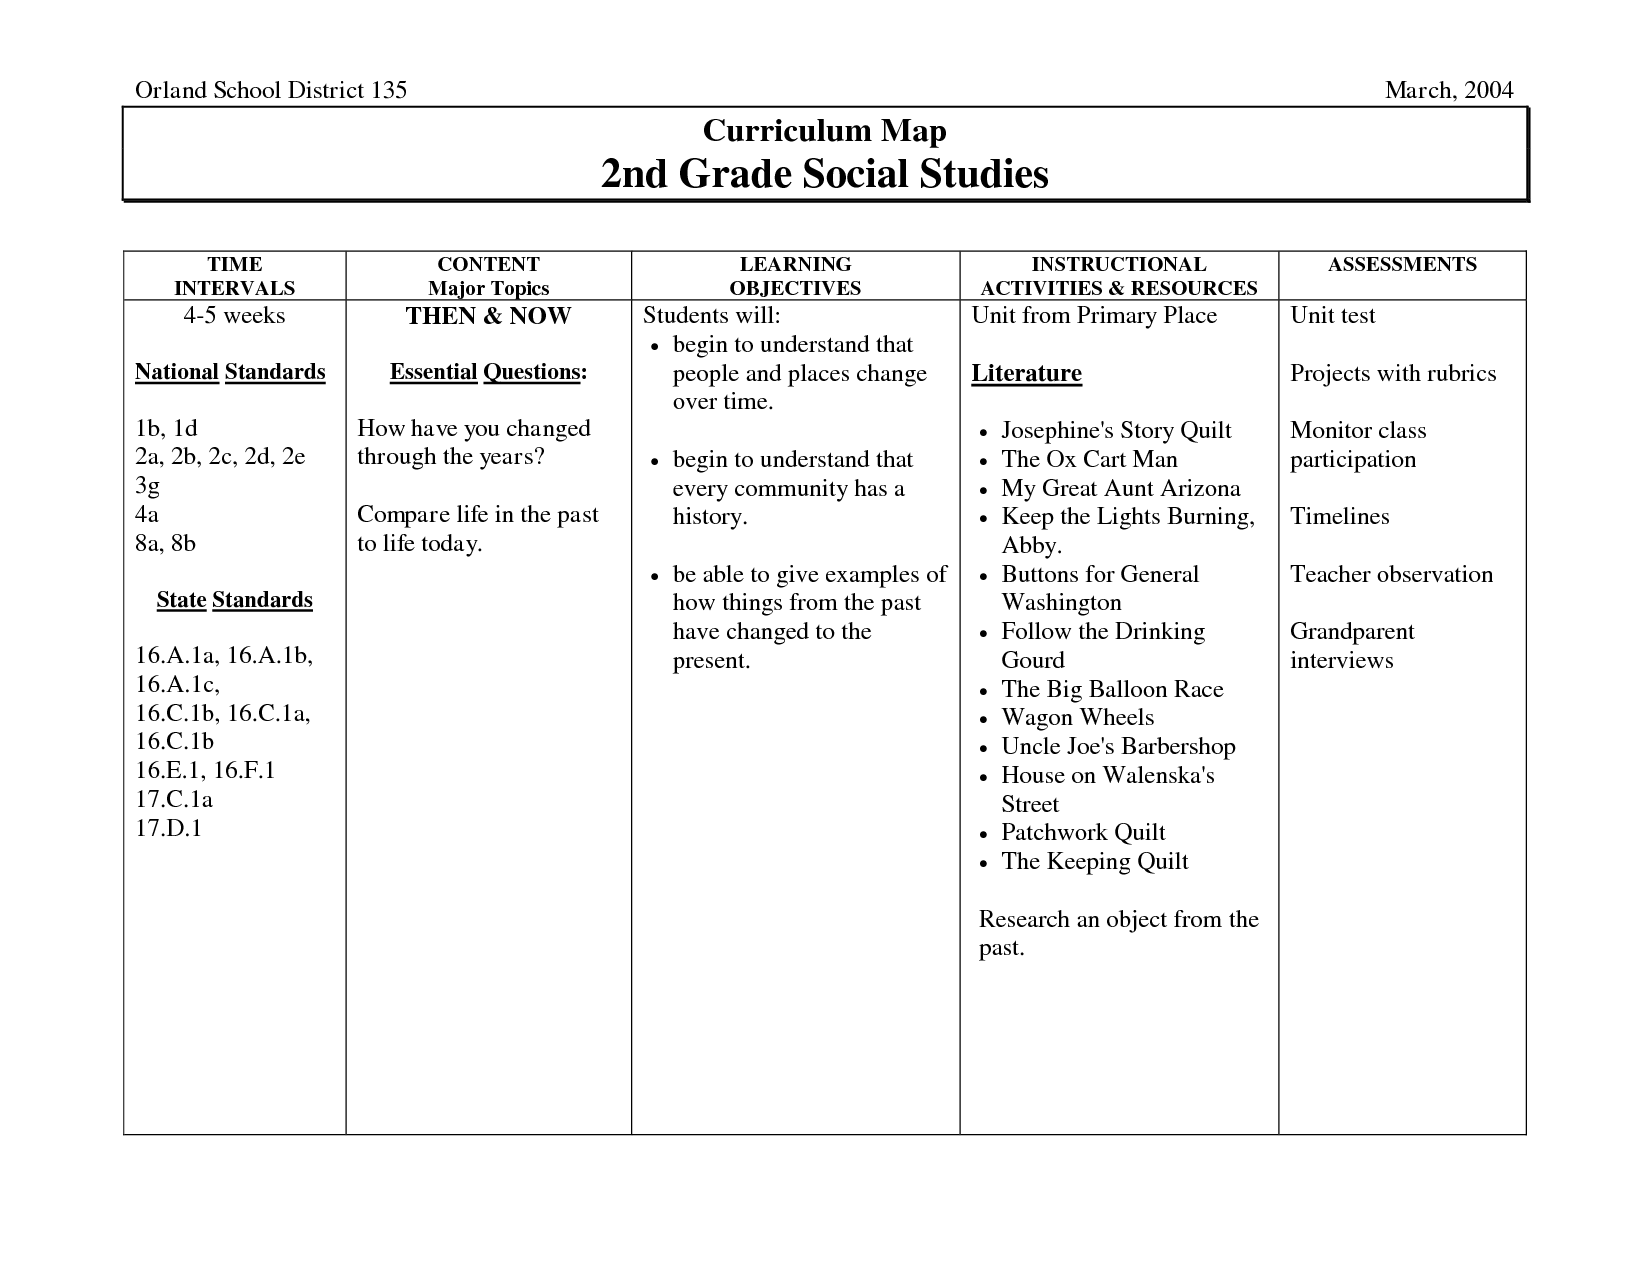 Second Grade Social Studies Worksheet